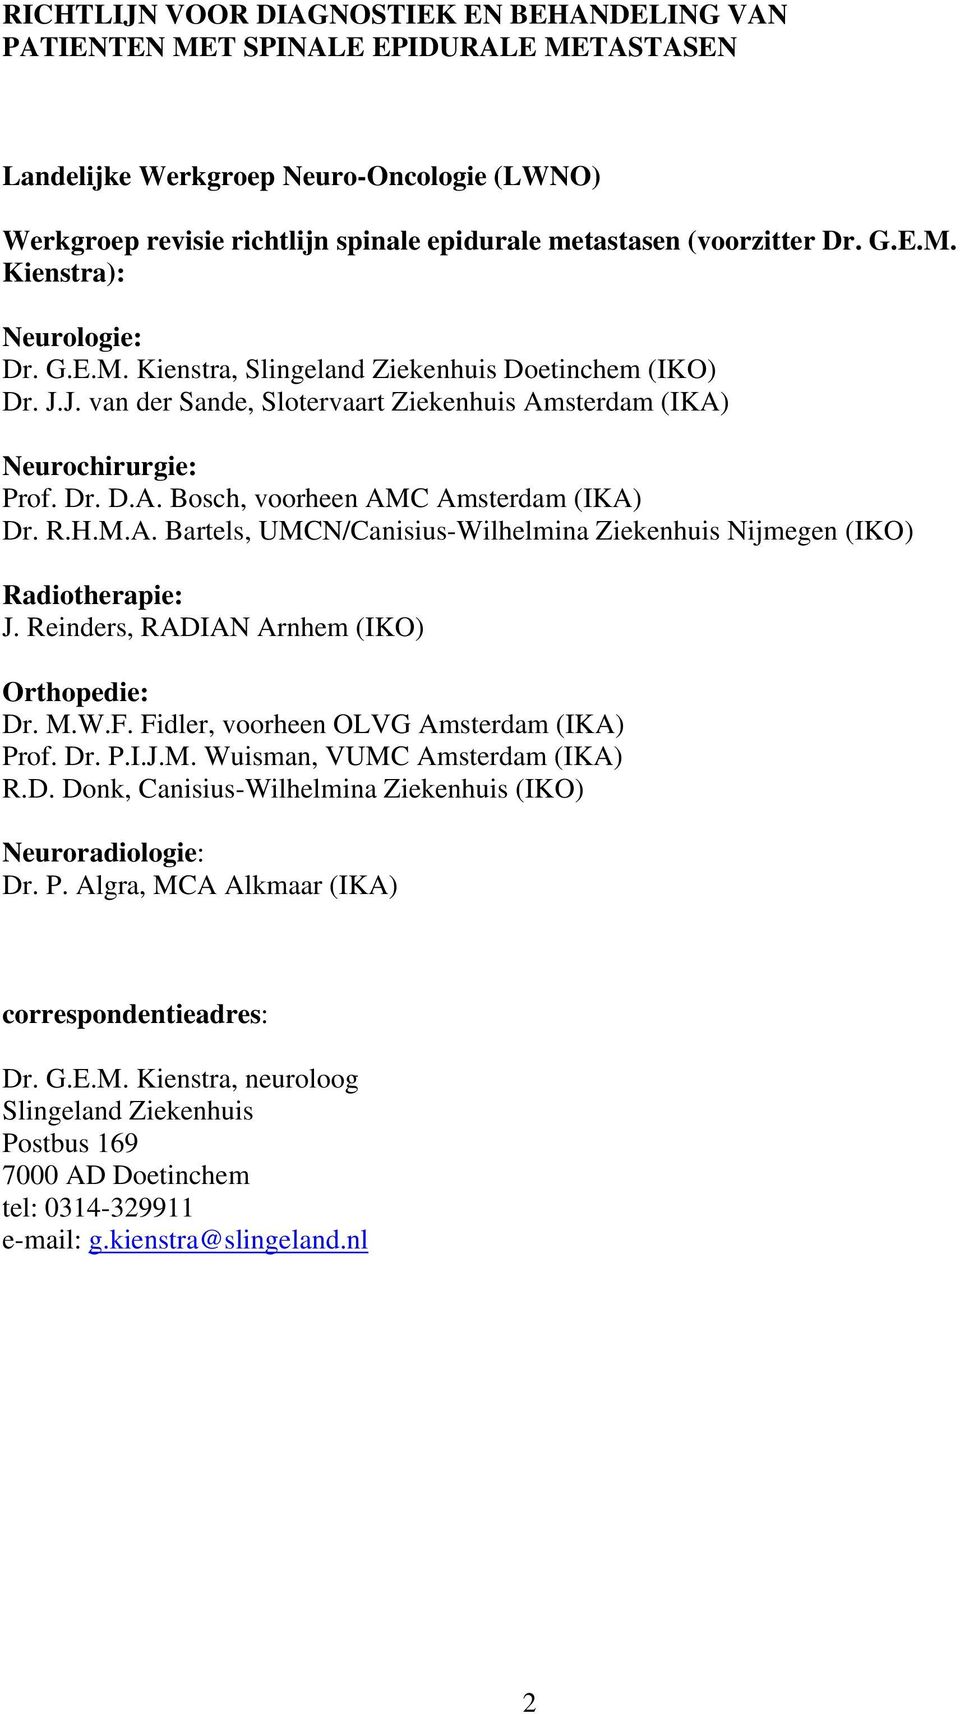 R.H.M.A. Bartels, UMCN/Canisius-Wilhelmina Ziekenhuis Nijmegen (IKO) Radiotherapie: J. Reinders, RADIAN Arnhem (IKO) Orthopedie: Dr. M.W.F. Fidler, voorheen OLVG Amsterdam (IKA) Prof. Dr. P.I.J.M. Wuisman, VUMC Amsterdam (IKA) R.